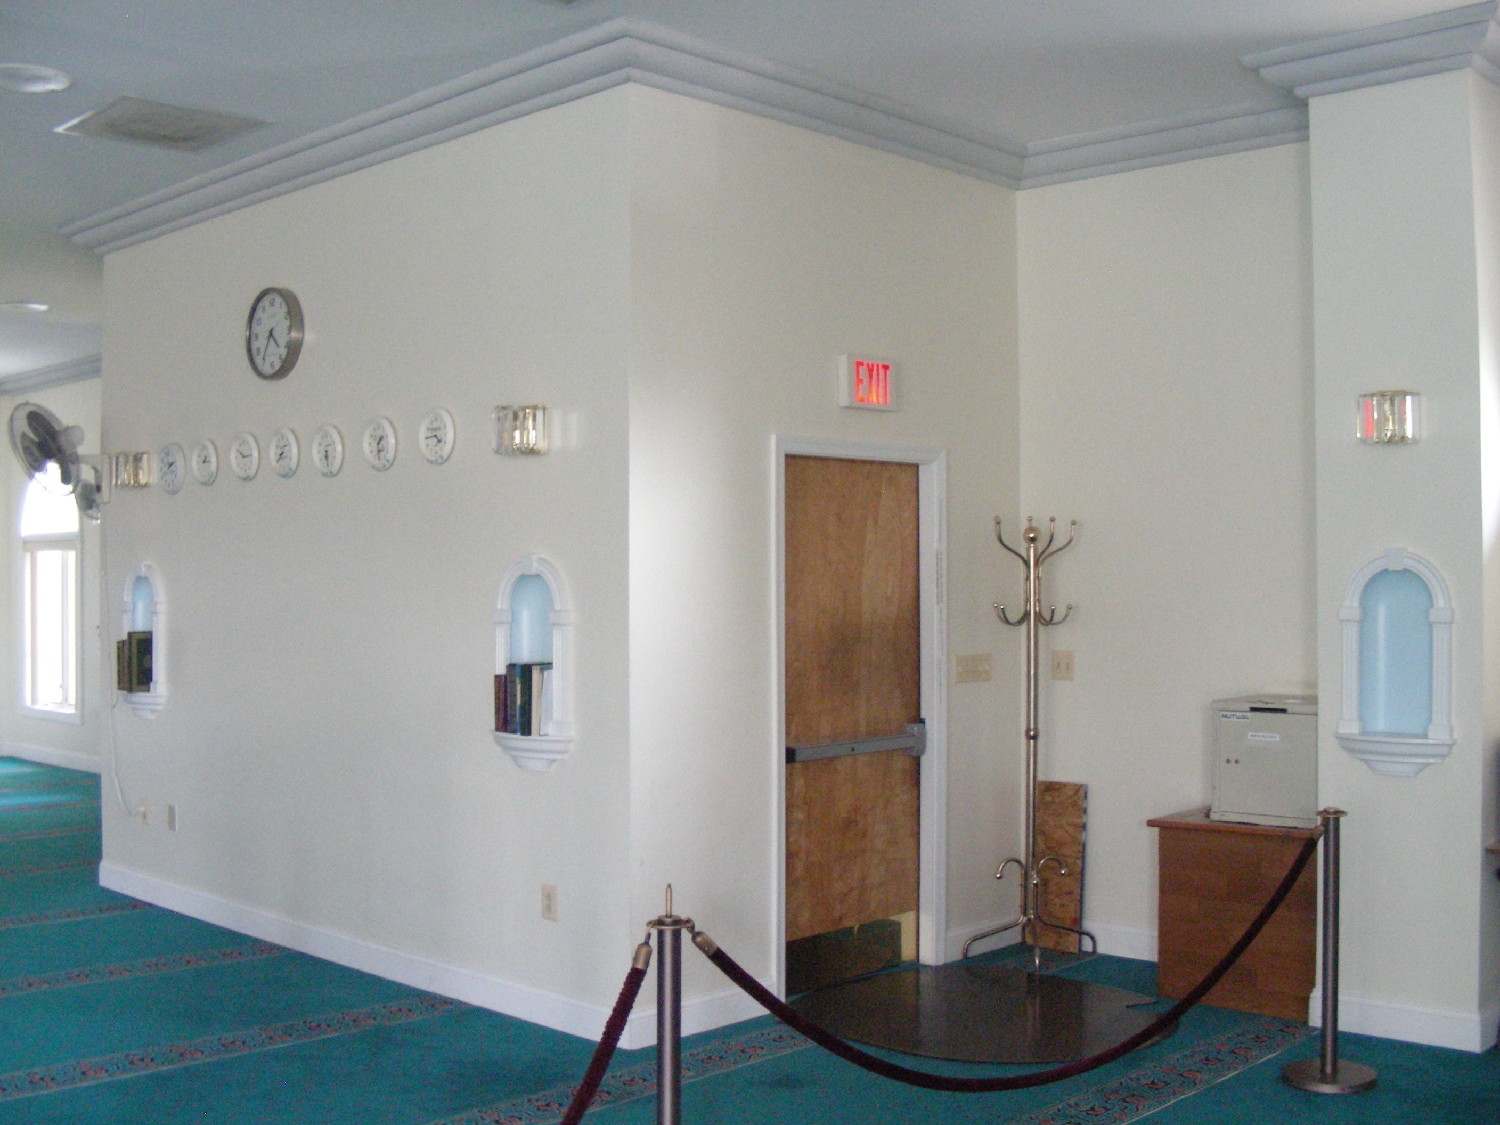 A door to the prayer hall